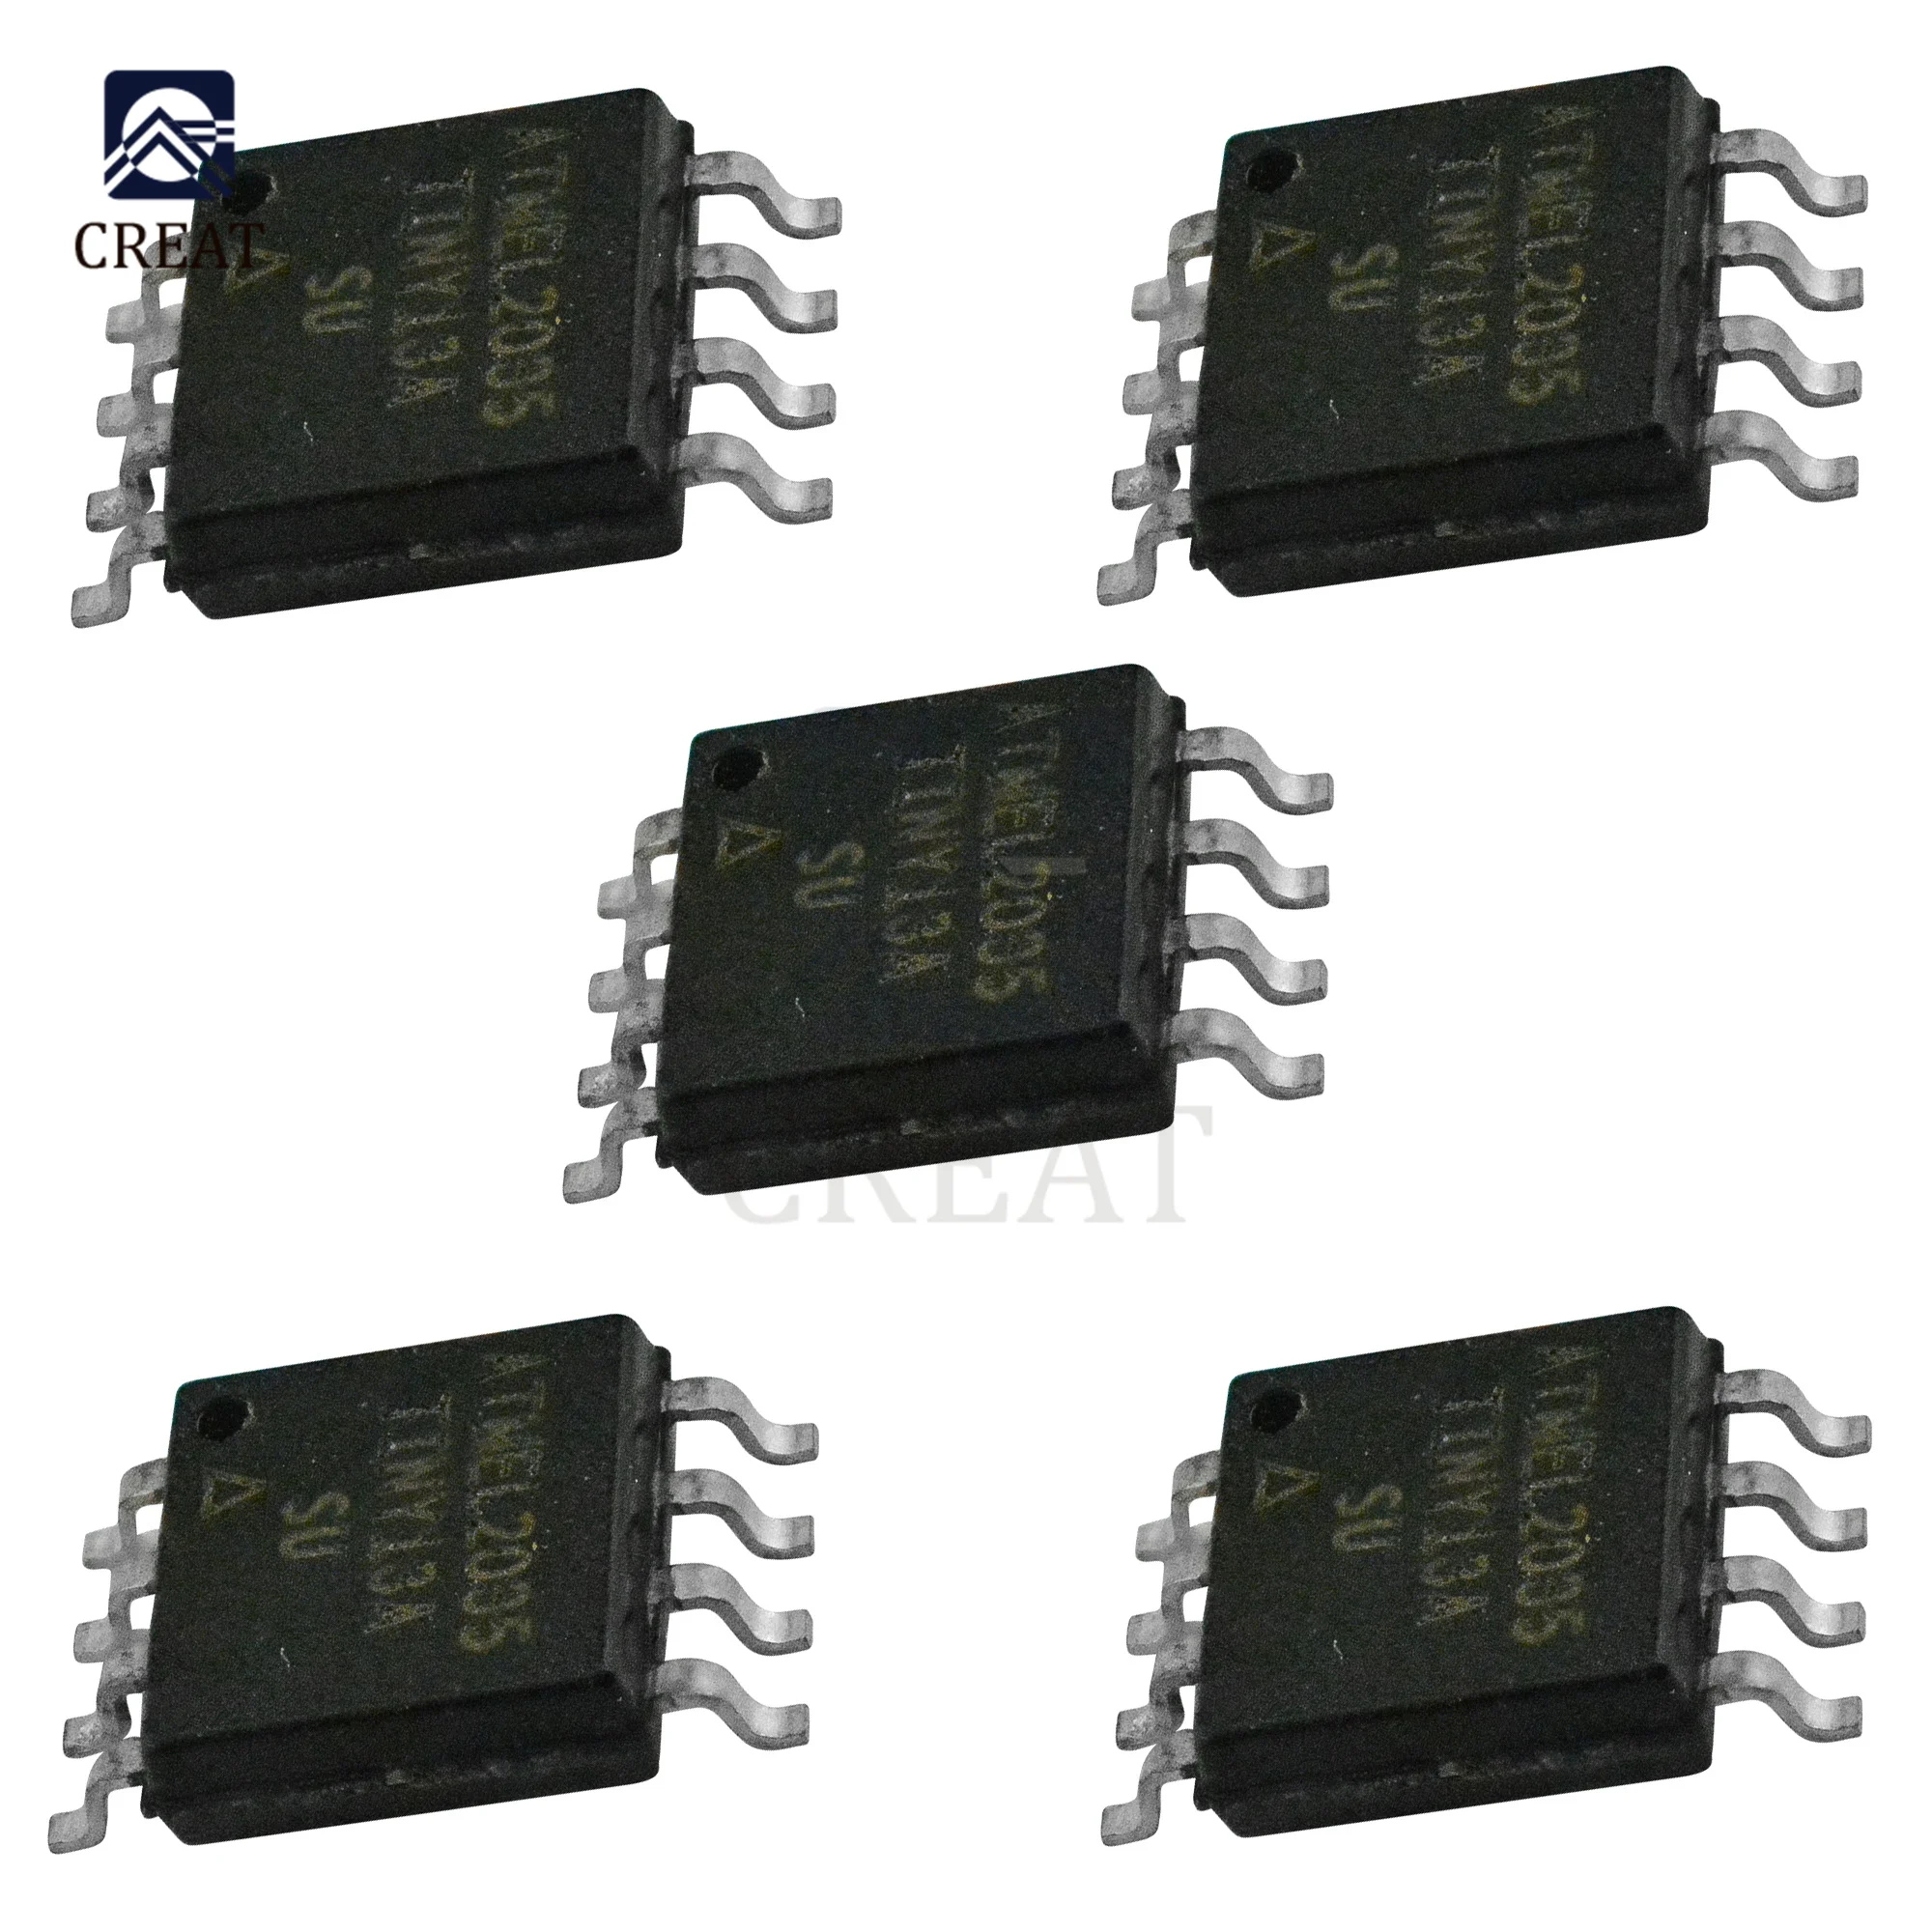 

5PCS/Lot IC Chips ATTINY13 ATTINY13A TINY13A MCU AVR SOP-8 Original Integrate Circuit Chip